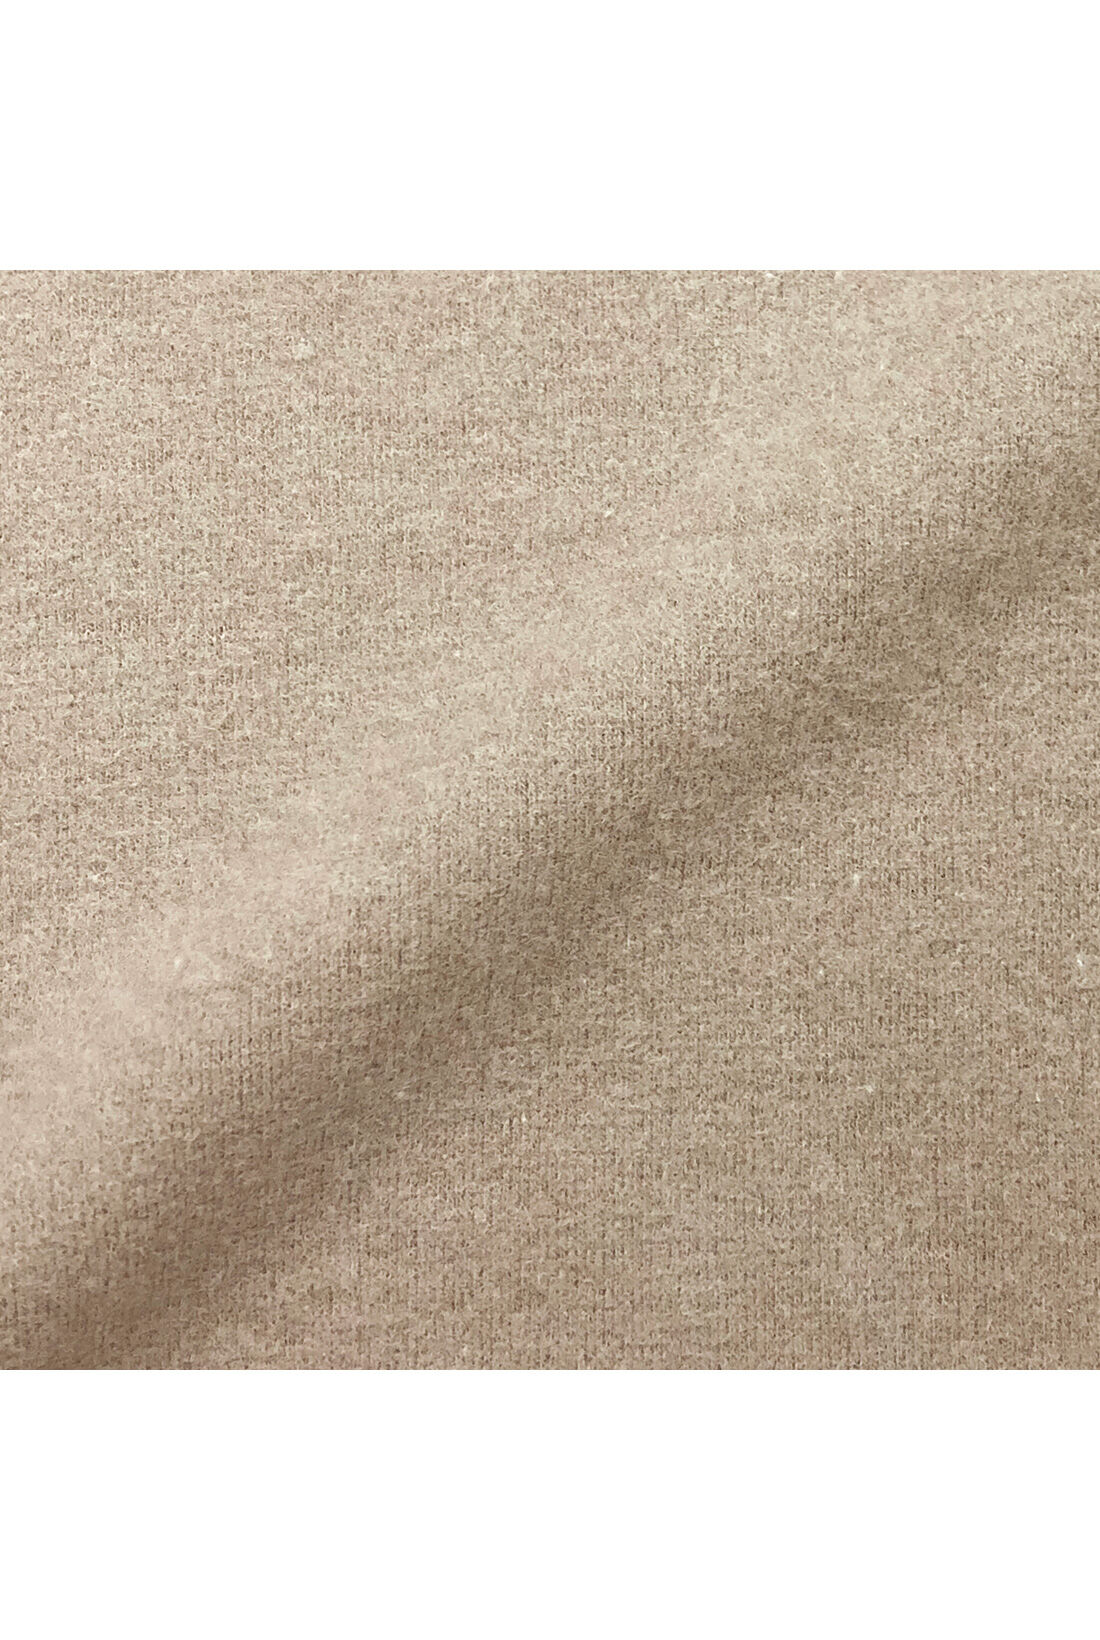 IEDIT|【おはだが気になるみんなへ】完全無縫製(R) KIREILABO(R) 裏起毛八分袖パッド付きインナートップスの会